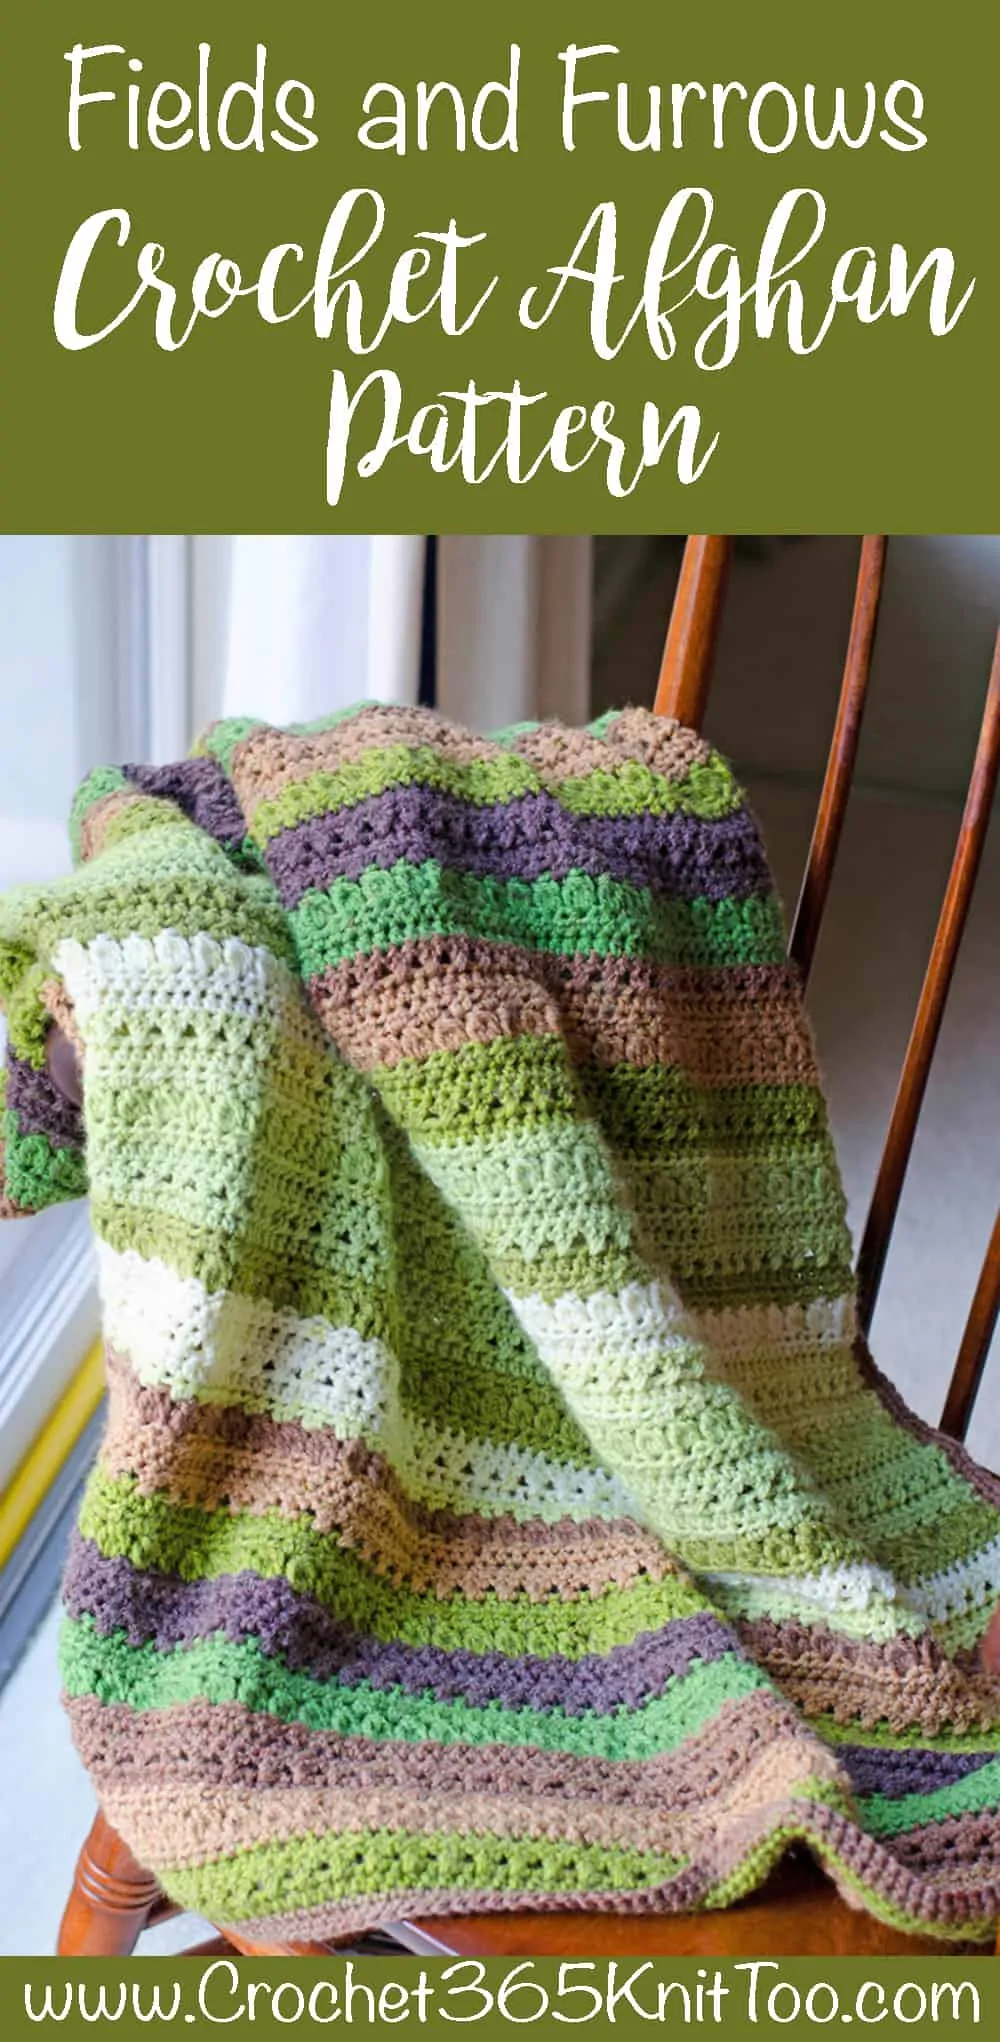 Free Crochet afghan pattern